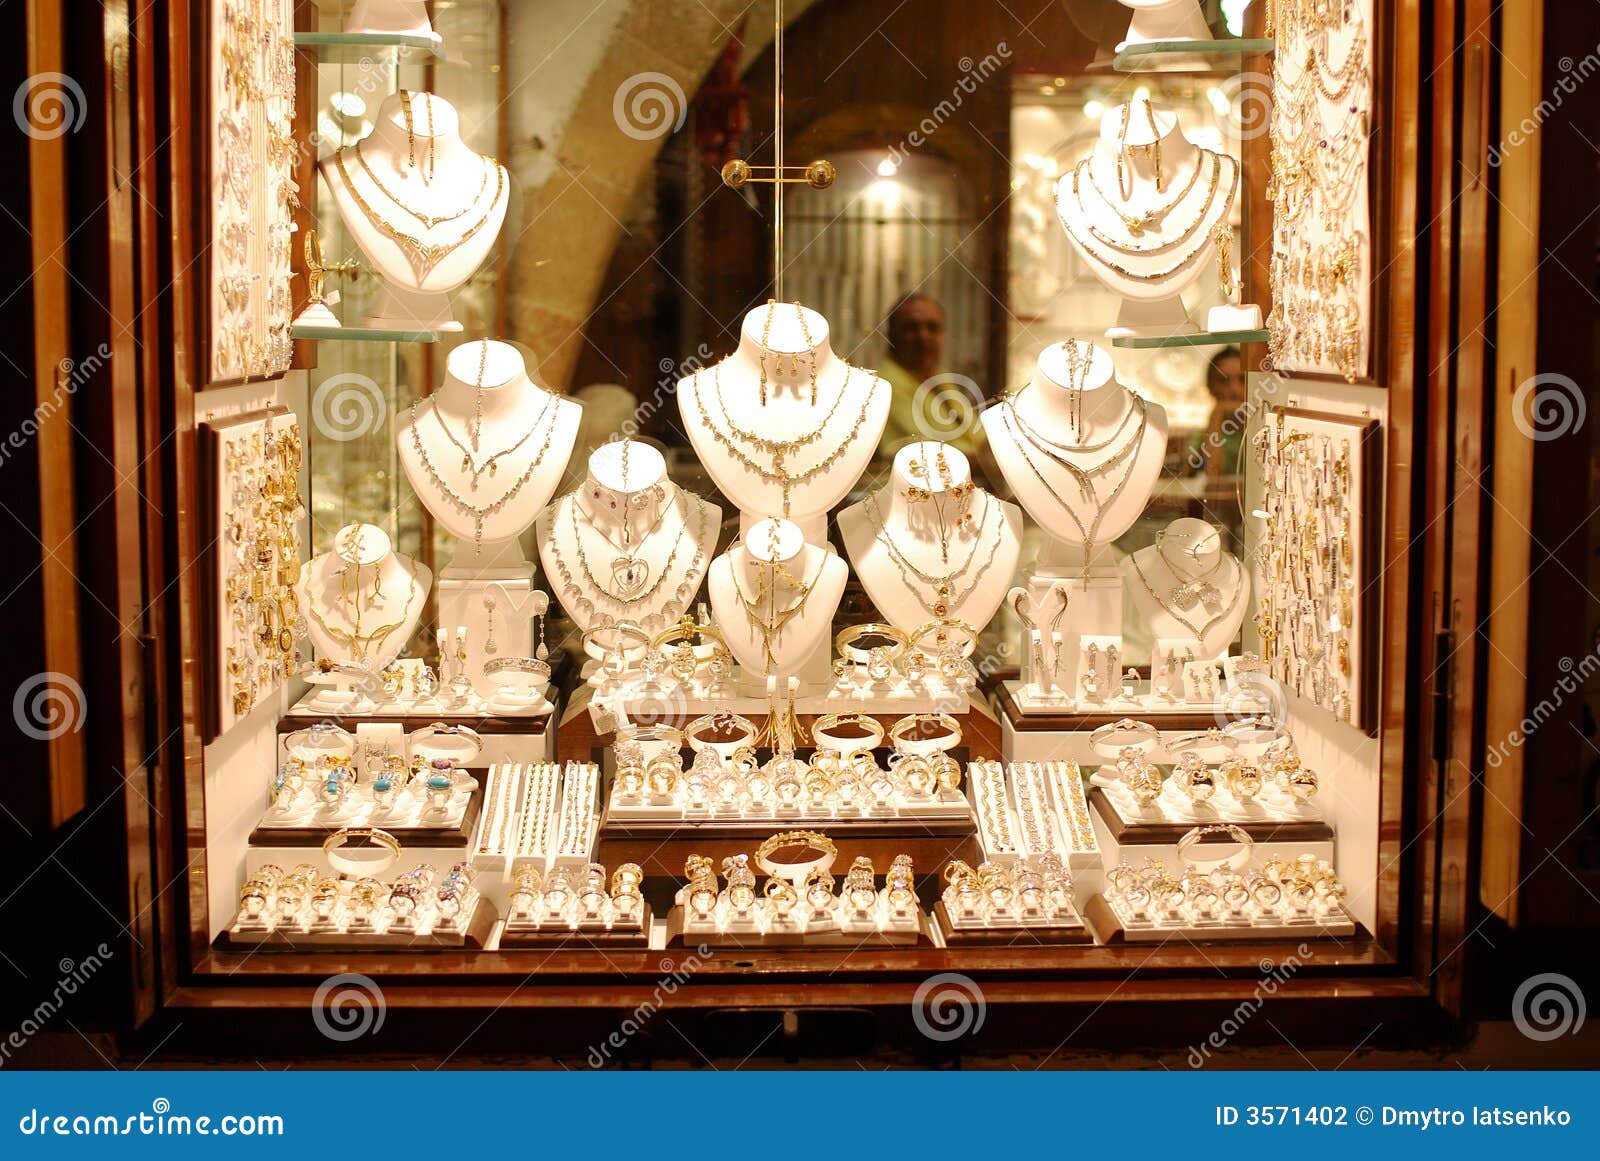 jewelry store